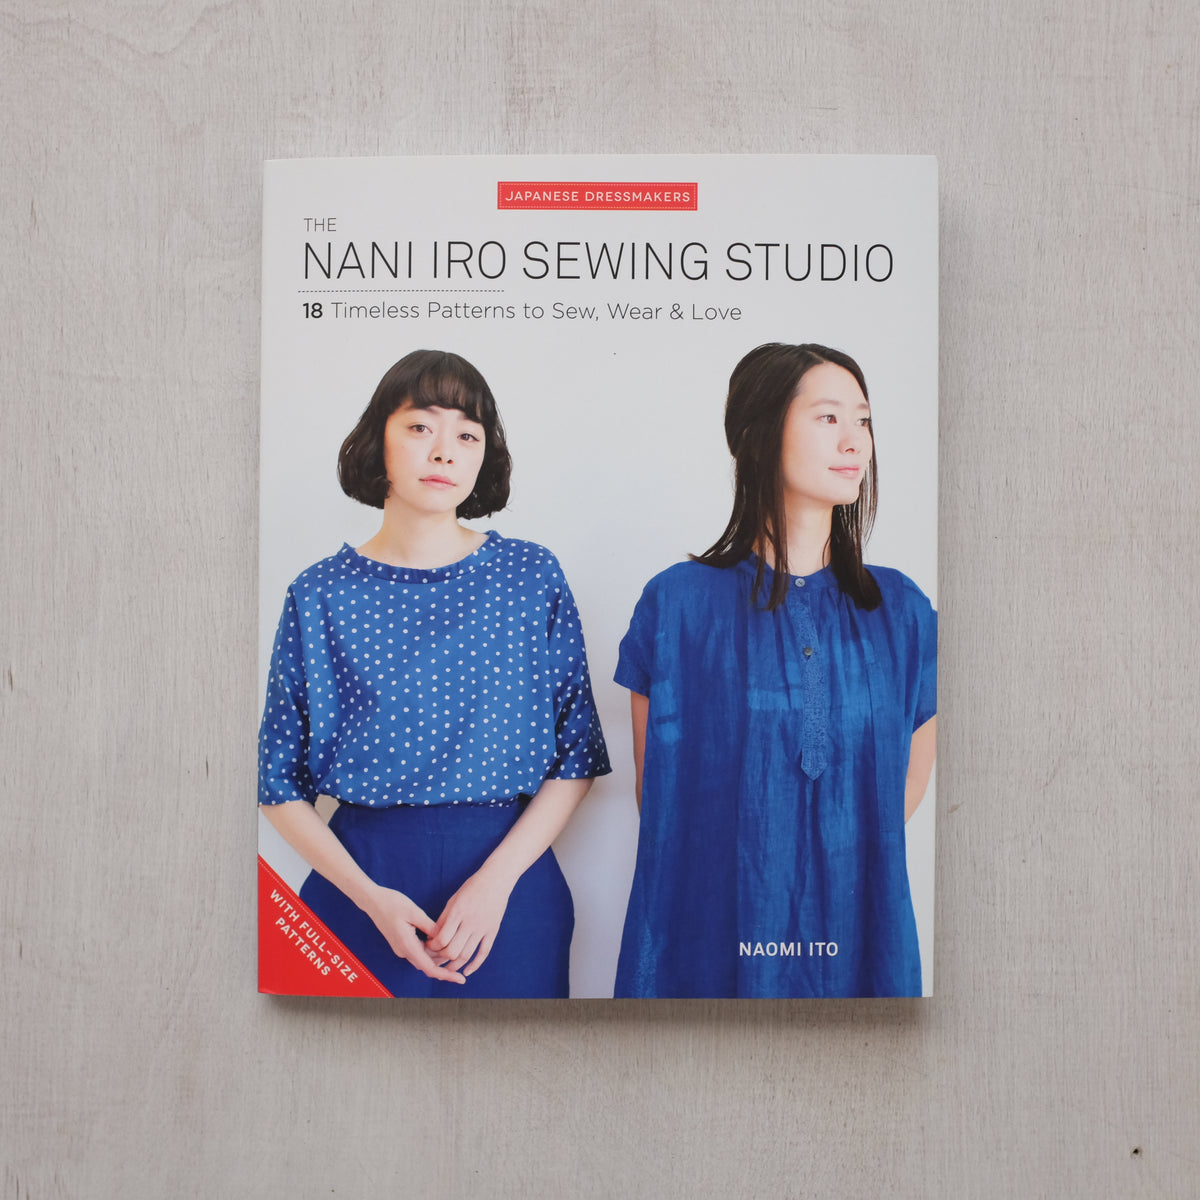 Label: The Nani Iro Sewing Studio 